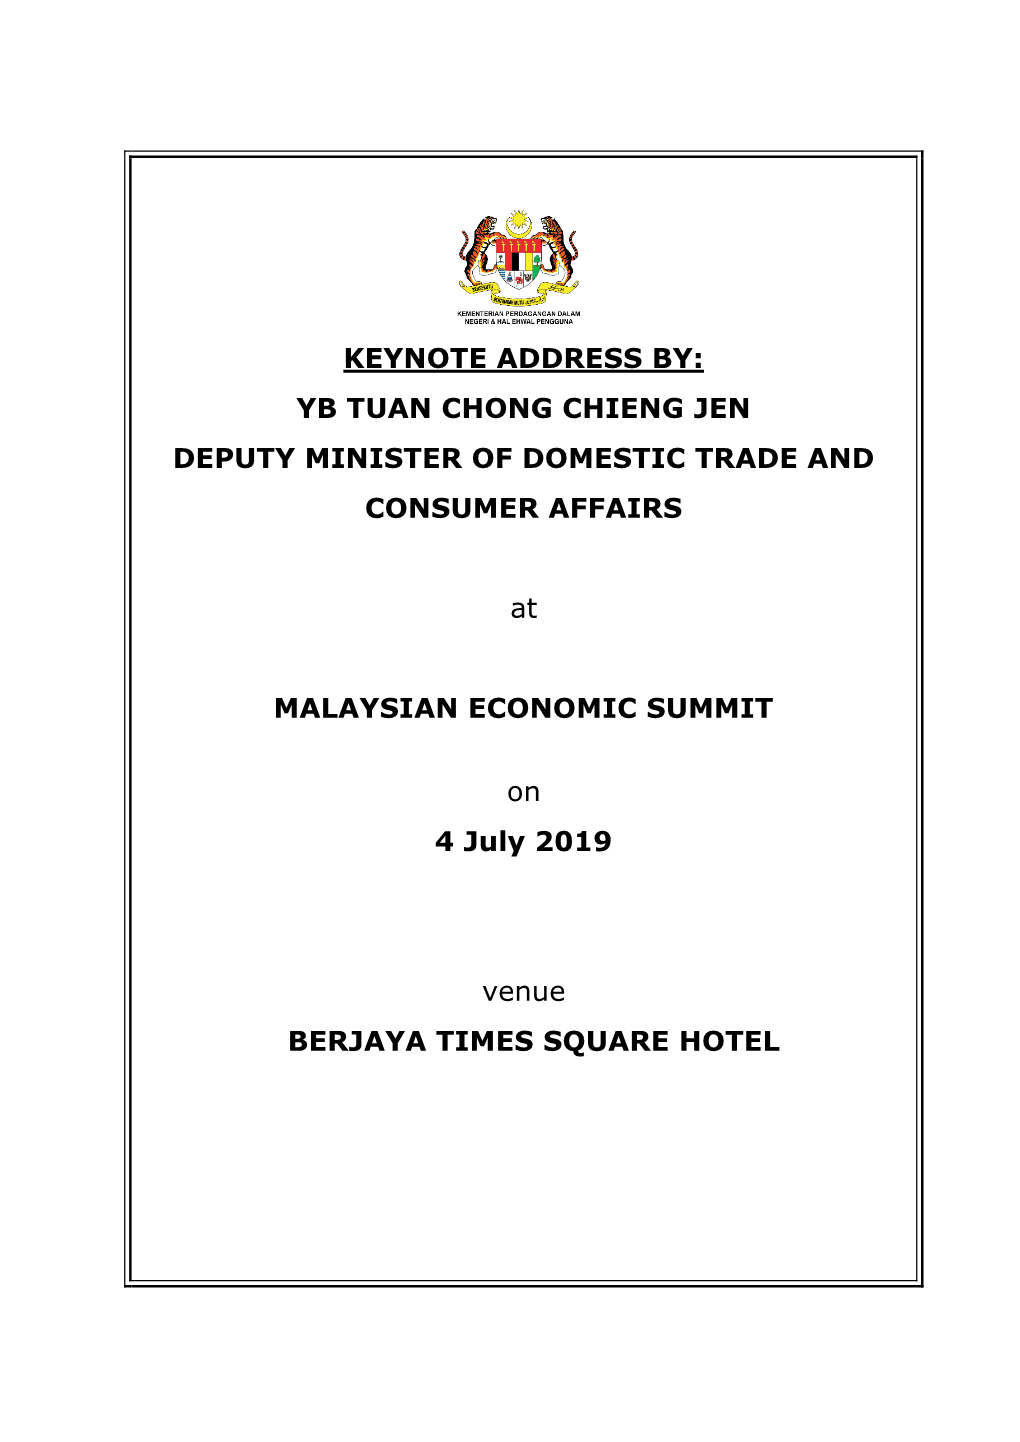 Keynote Address By: Yb Tuan Chong Chieng Jen Deputy Minister of Domestic Trade and Consumer Affairs